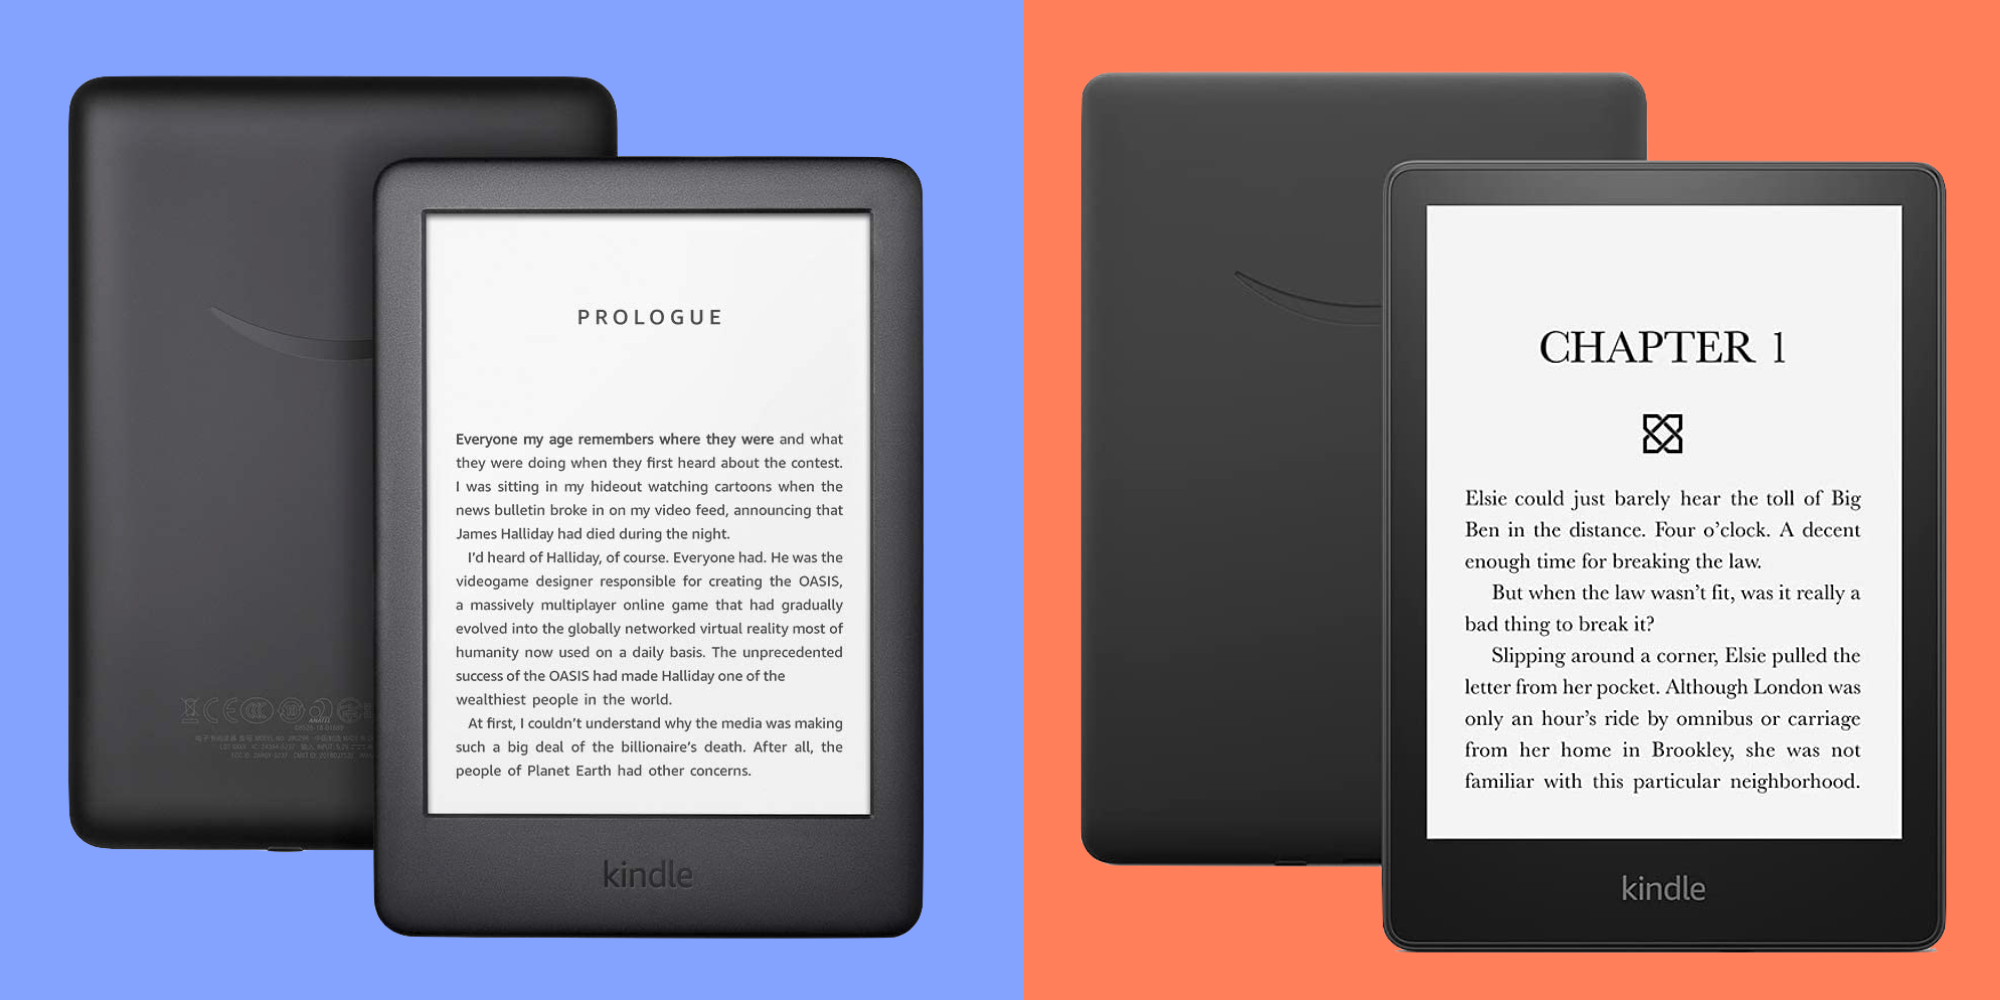 Amazon Kindle and Kindle Paperwhite